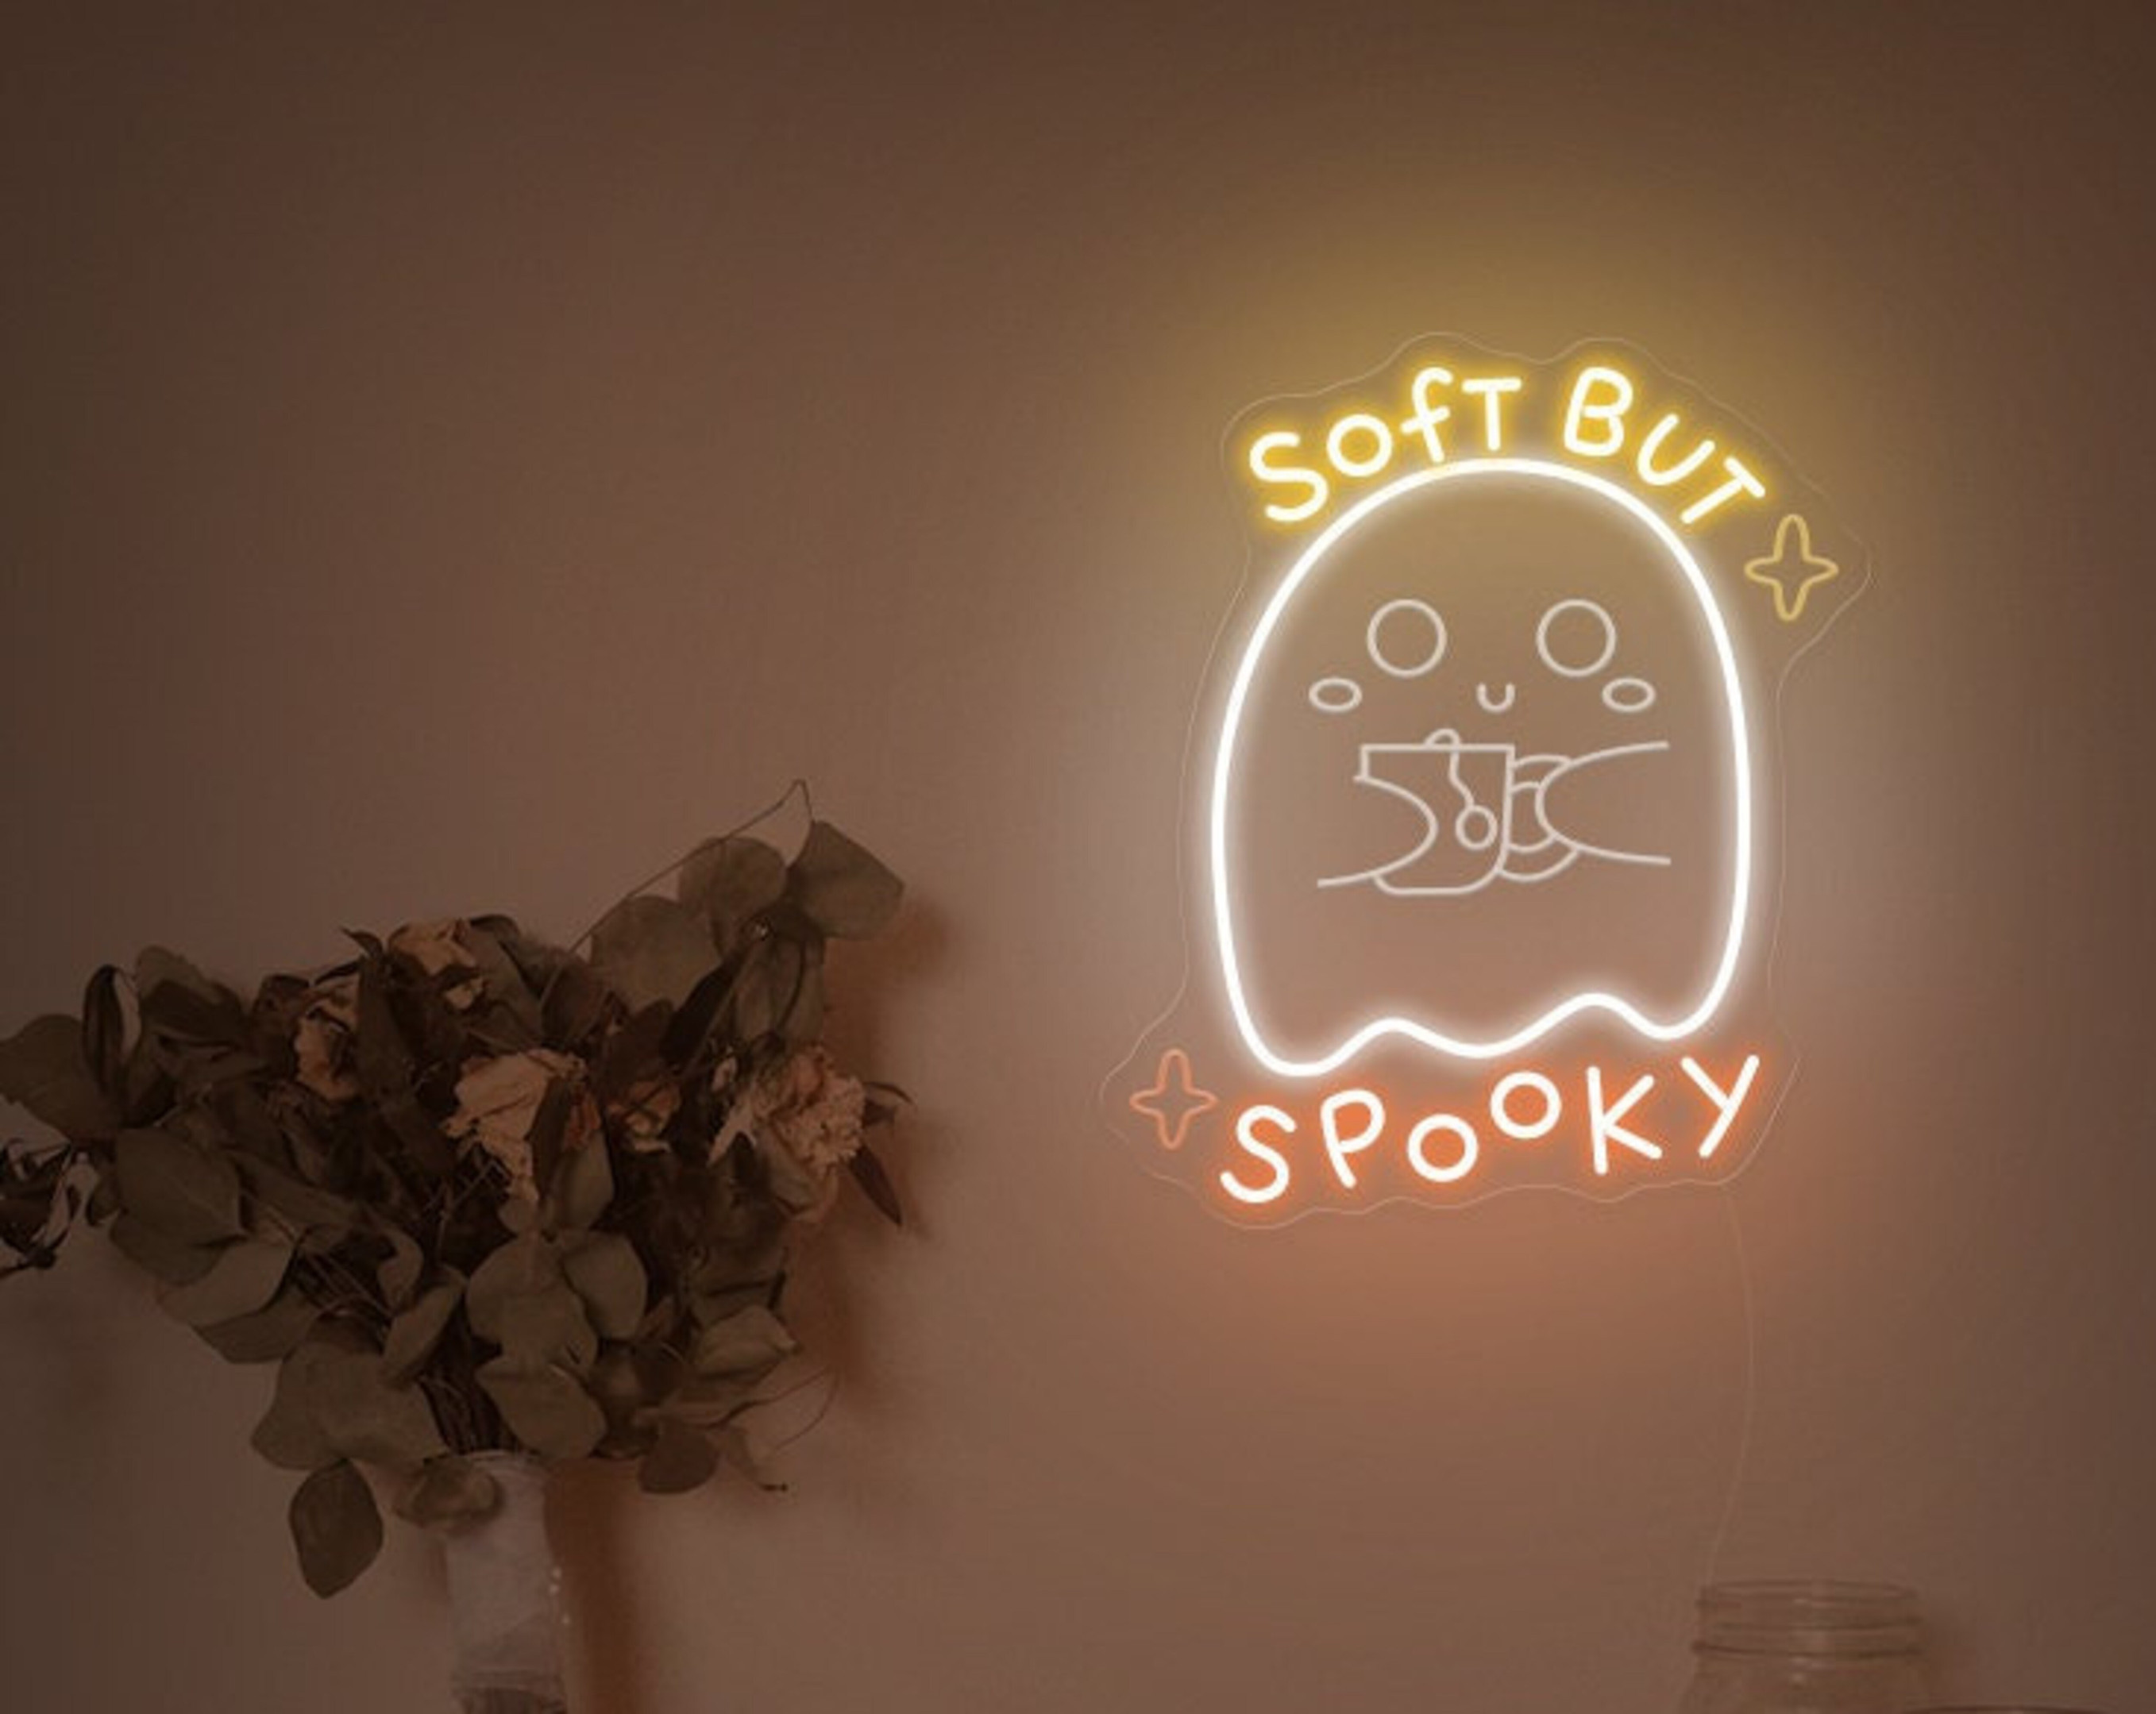 Soft But Spooky Neon Sign,Spooky Halloween  Neon Light,Funny Halloween Gift,Western Wall Art Neon, Cute Spooky Neon Sign